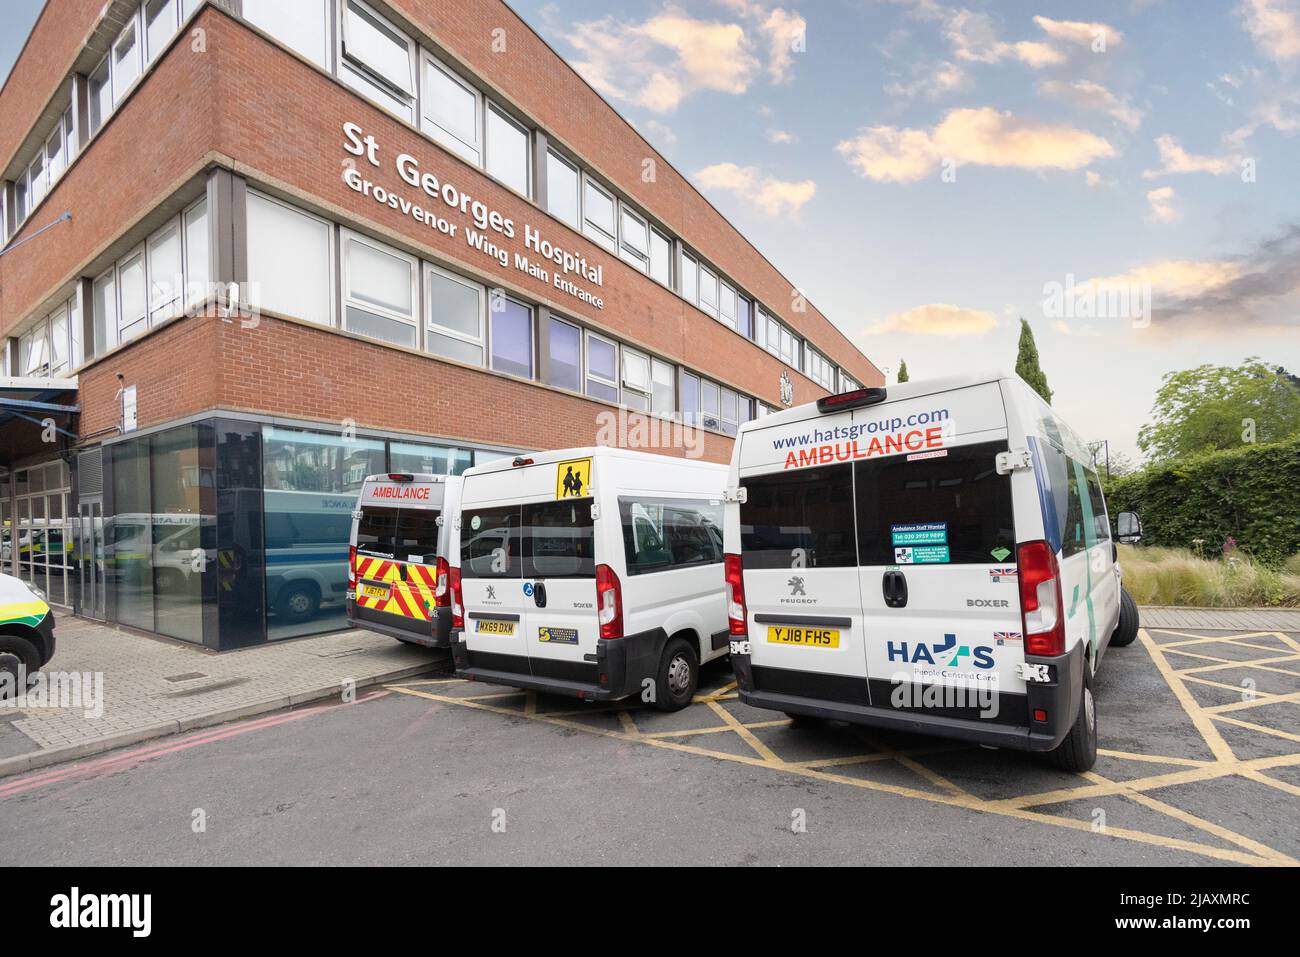 St Georges Hospital London UK - vista esterna con ambulanze NHS, St Georges, London Teaching Hospital Medical School, Tooting London UK Foto Stock